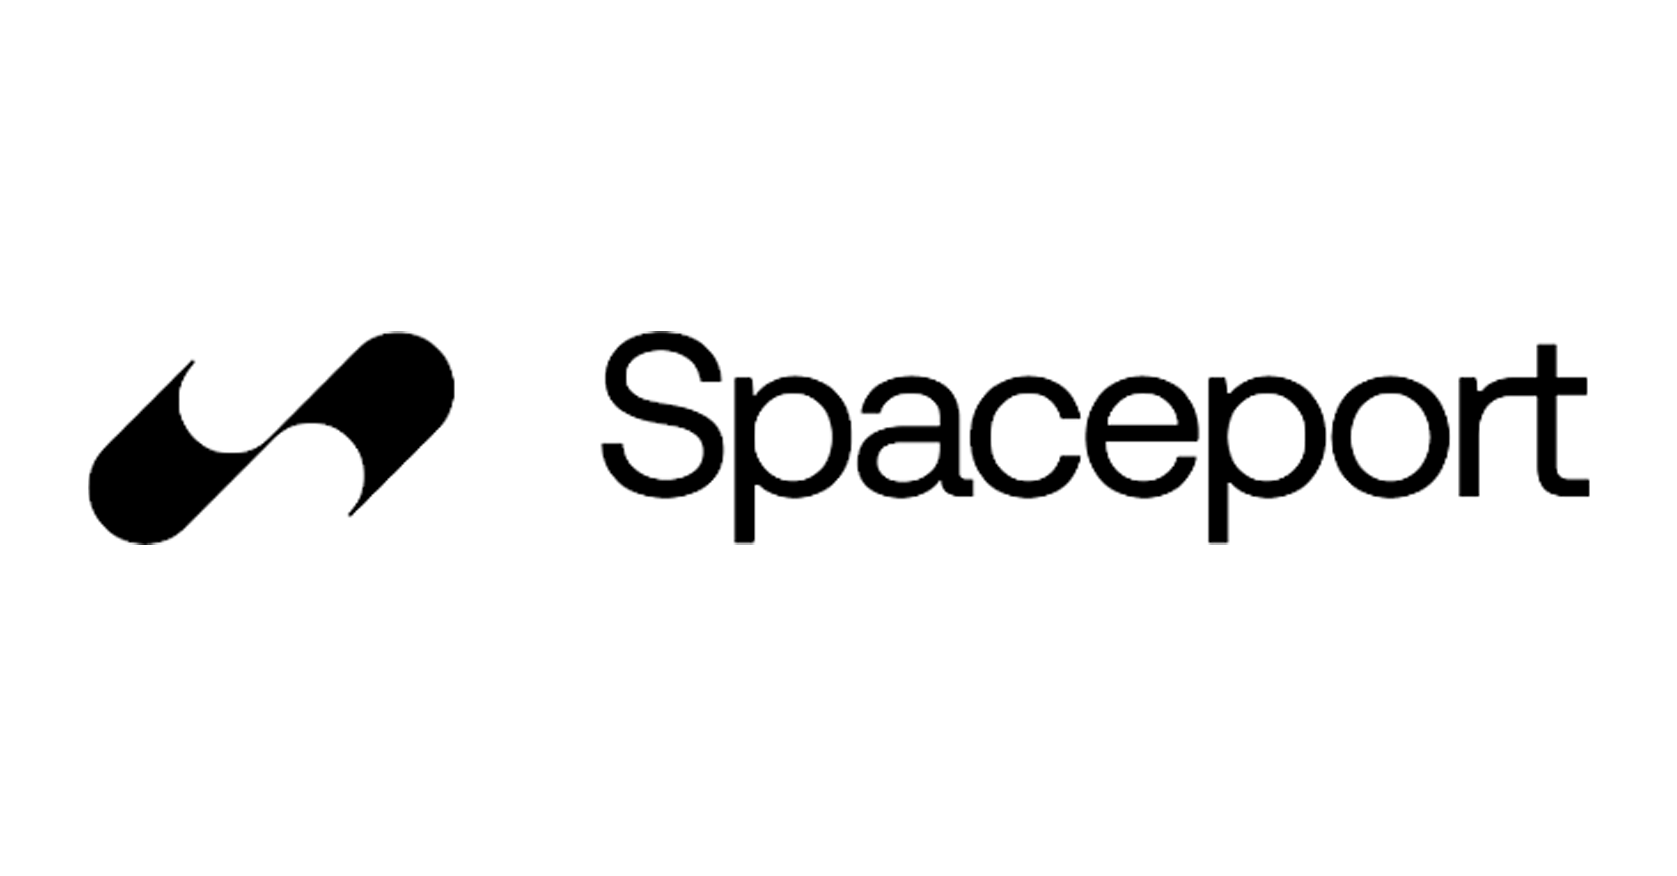 Spaceport-Logo-1